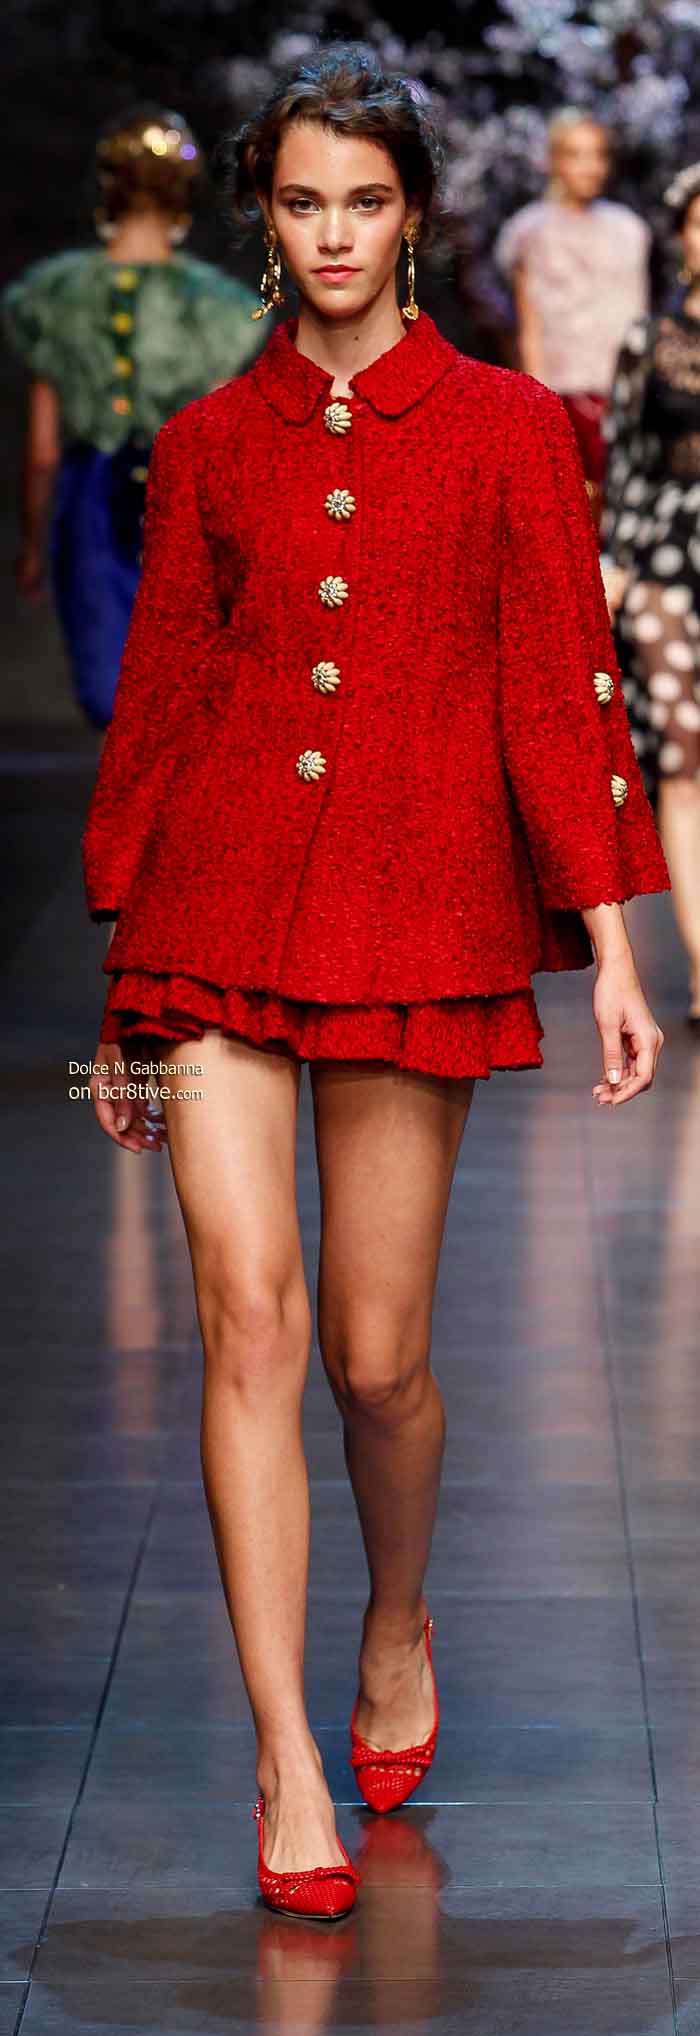 Dolce & Gabbana Spring 2014